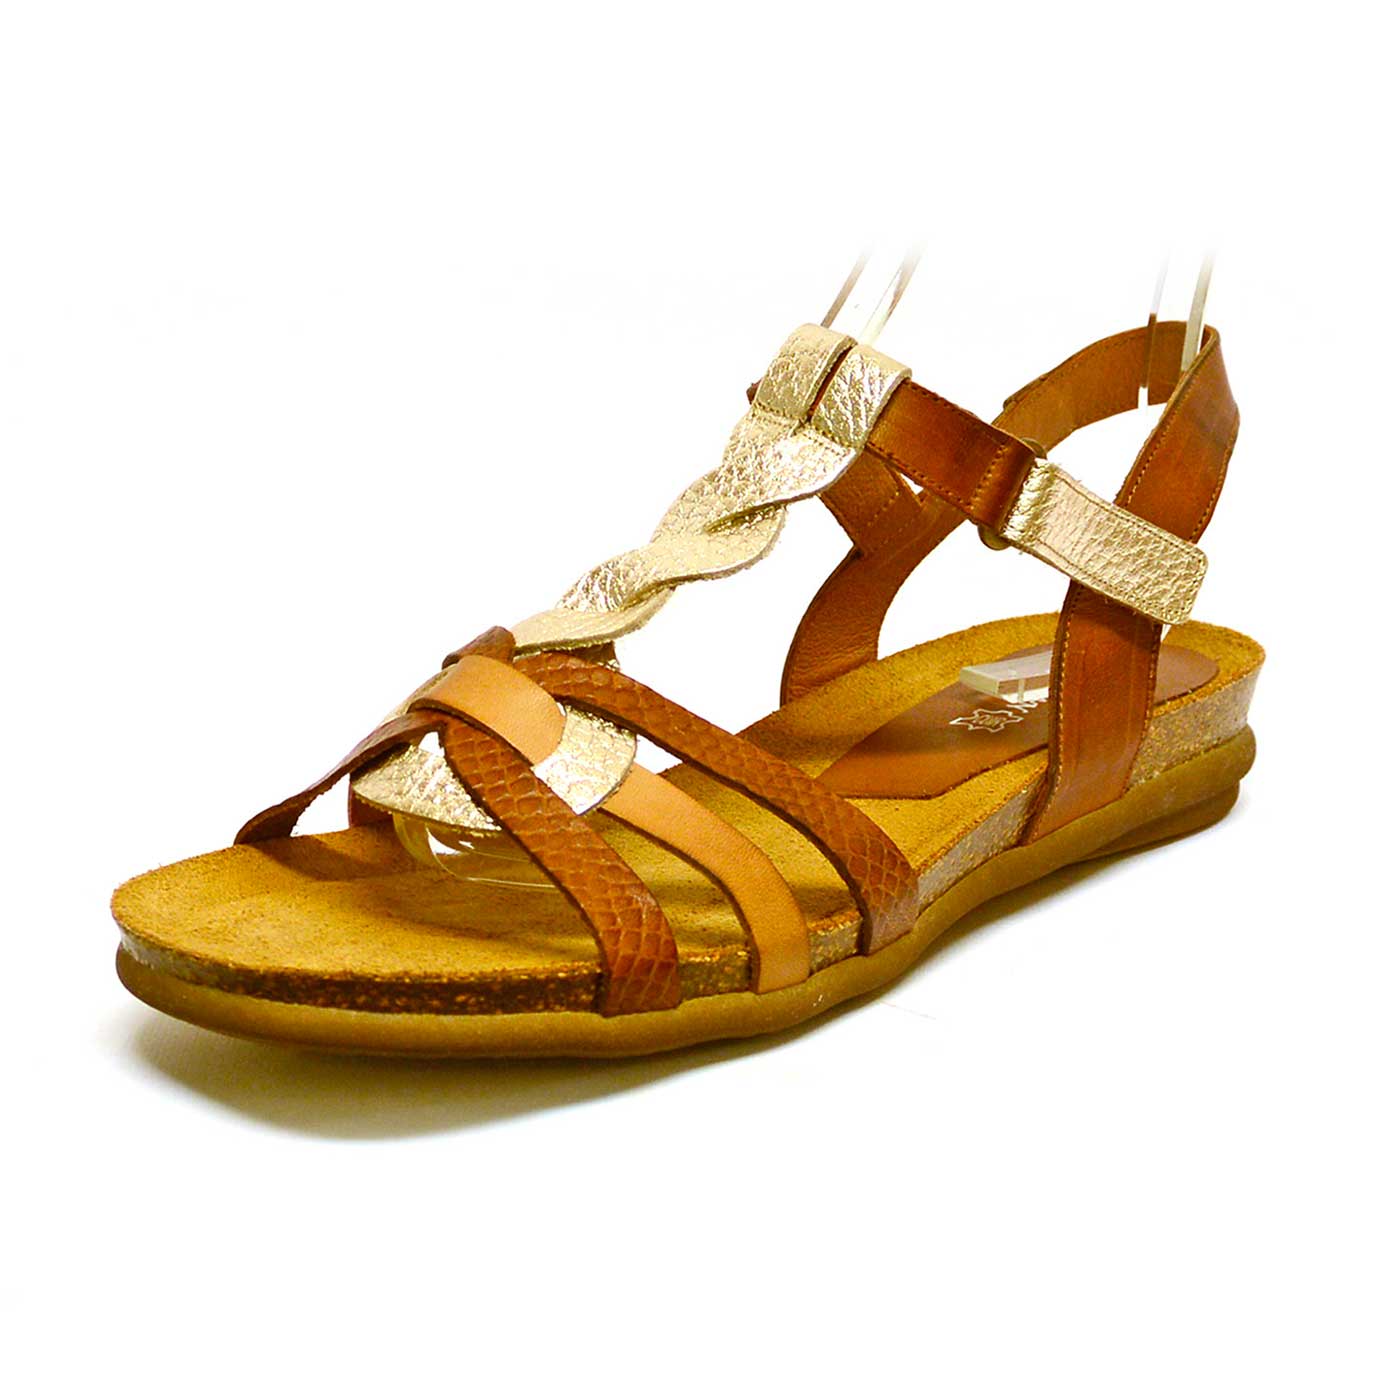 sandalettes cuir lisse marron multicolore platine, chaussures femme grande taille